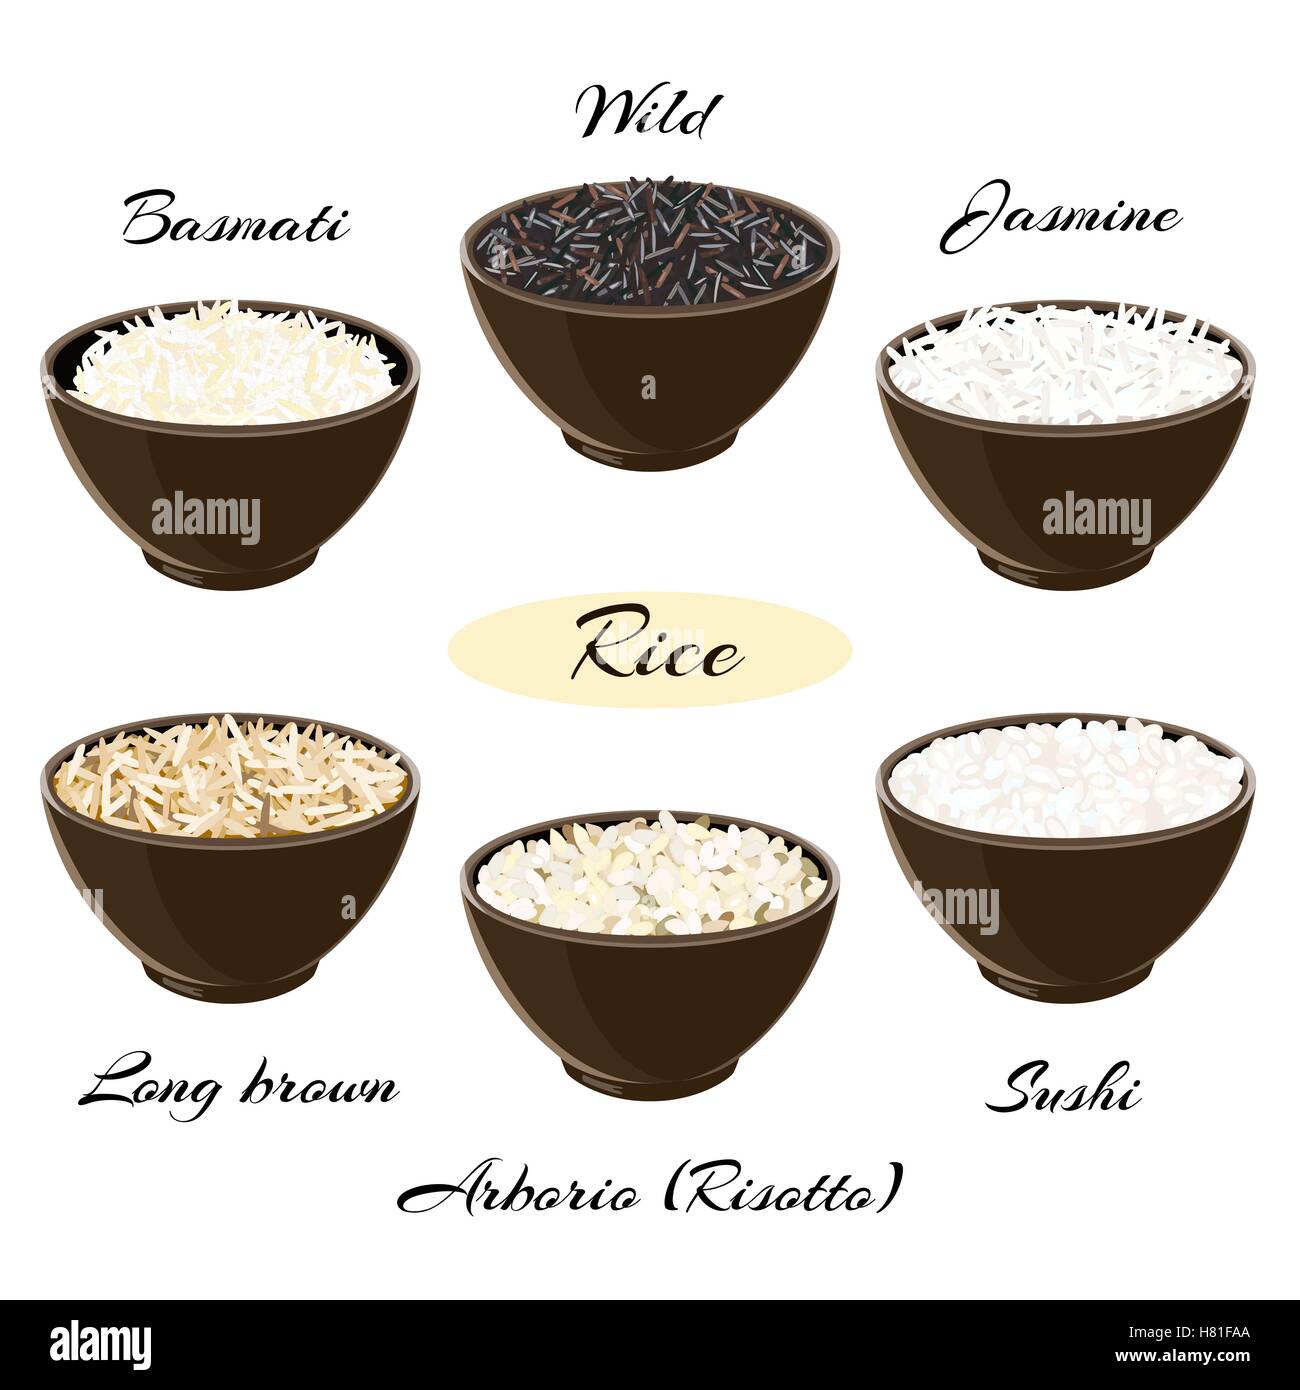 Different types of rice Basmati, wild, jasmine, long brown, arborio, sushi in ceramic bowls Vector illustration EPS 10. Stock Vector